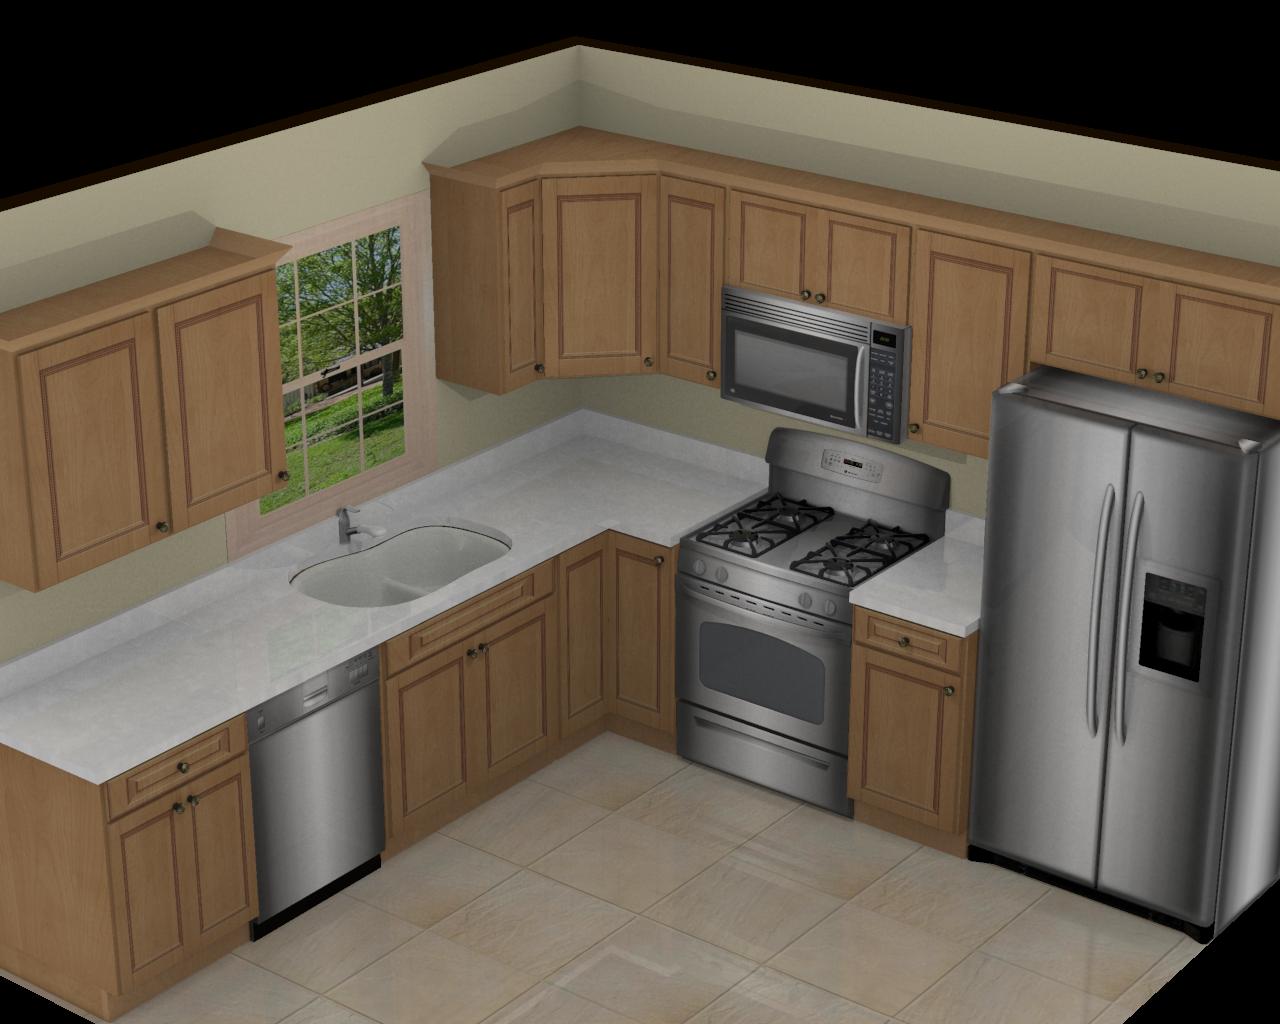 kitchen design ideas layout photo - 1